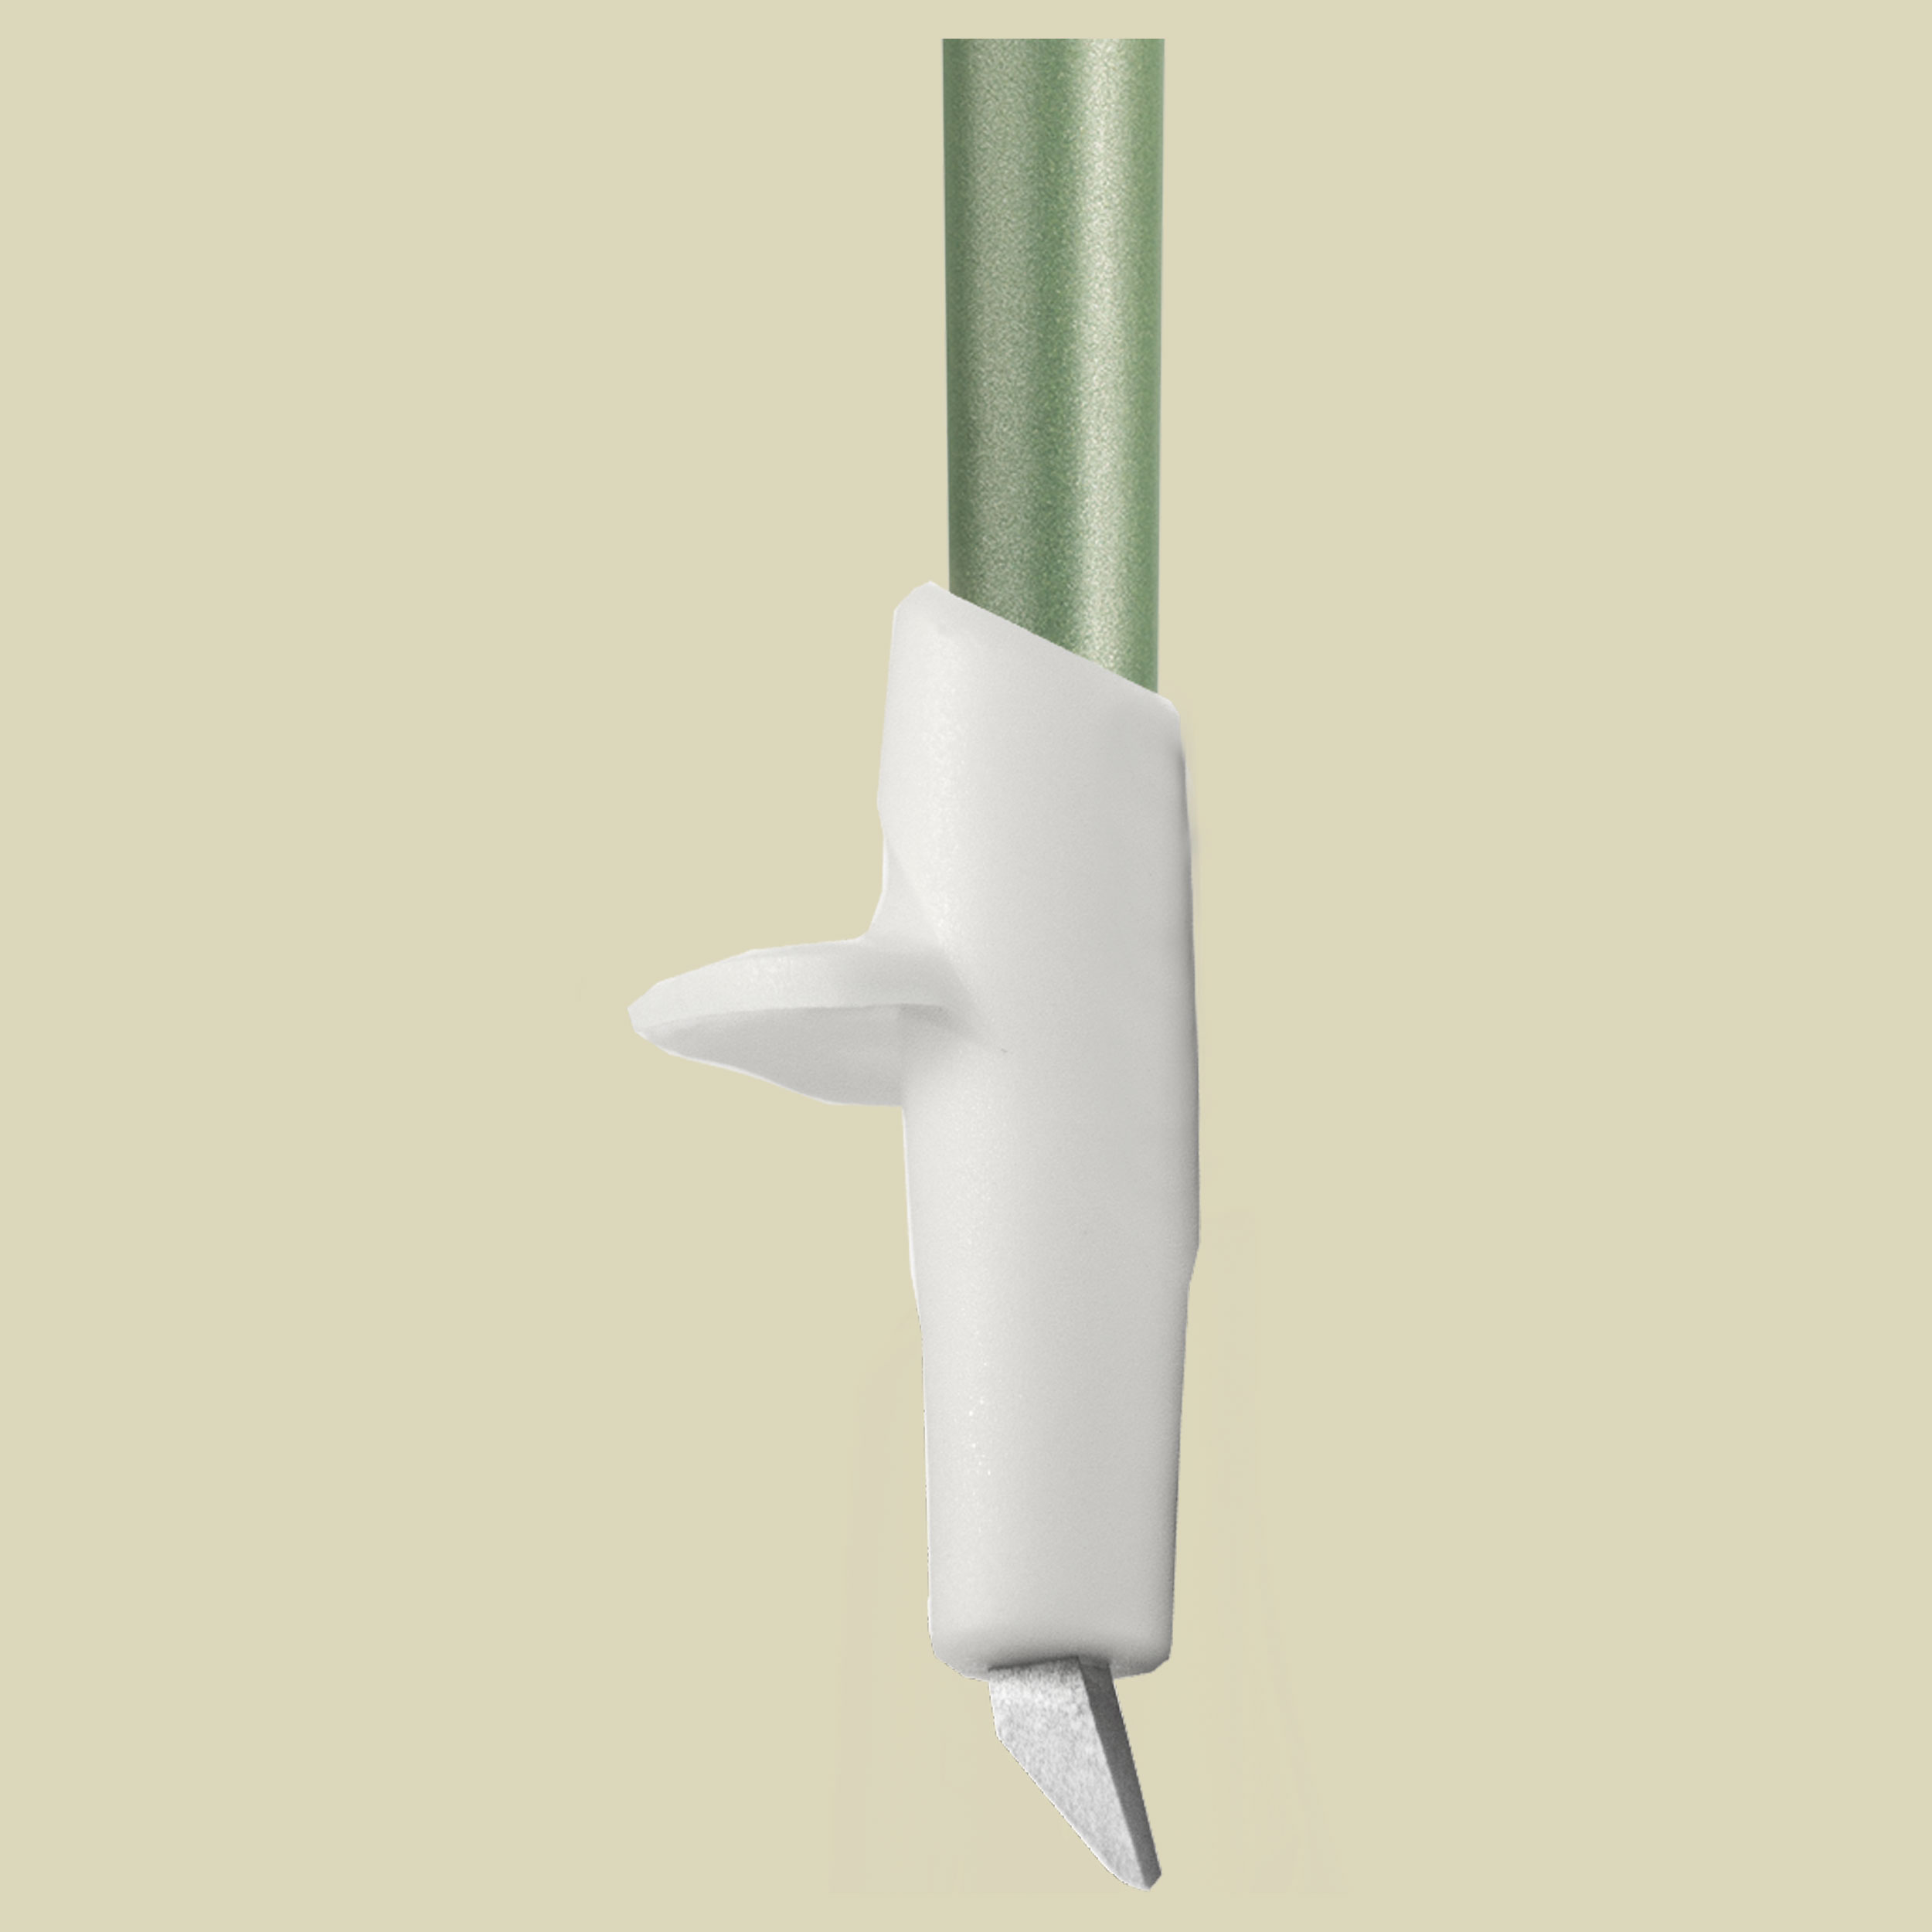 Passion Länge 100 cm Farbe smokegreen-white-dark anthracite